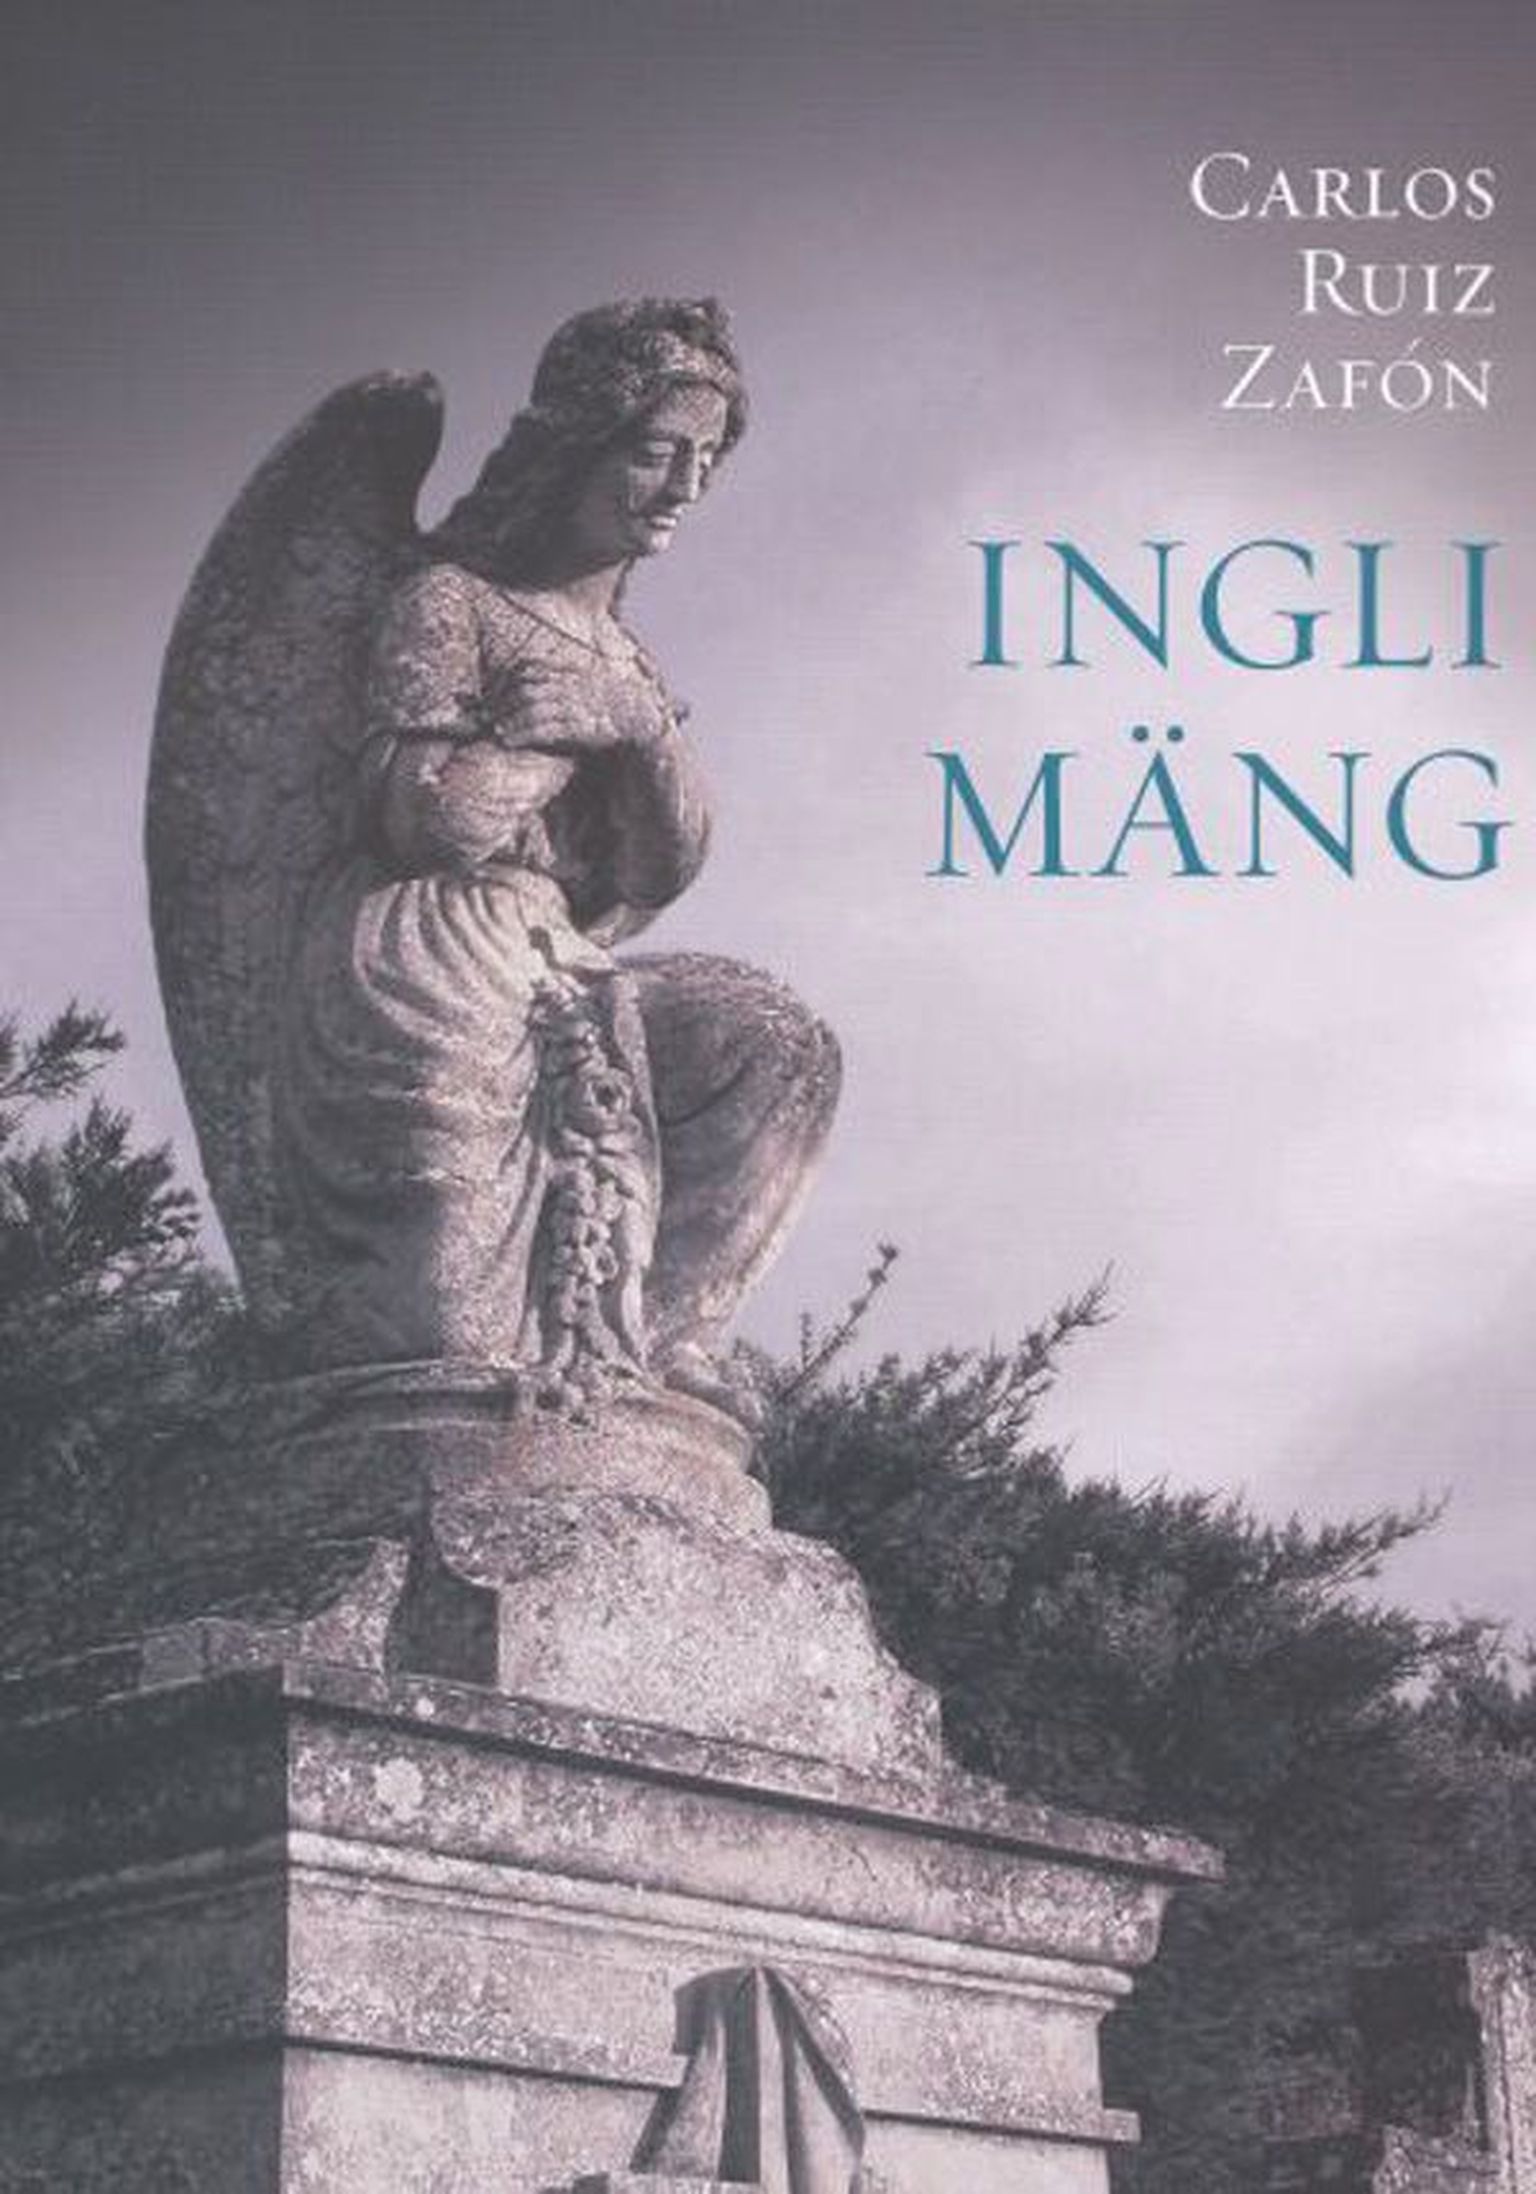 Raamat
Carlos Ruiz Zafón 
«Ingli mäng»
Varrak, 2010, 535 lk 
Tõlkija Kai Aareleid